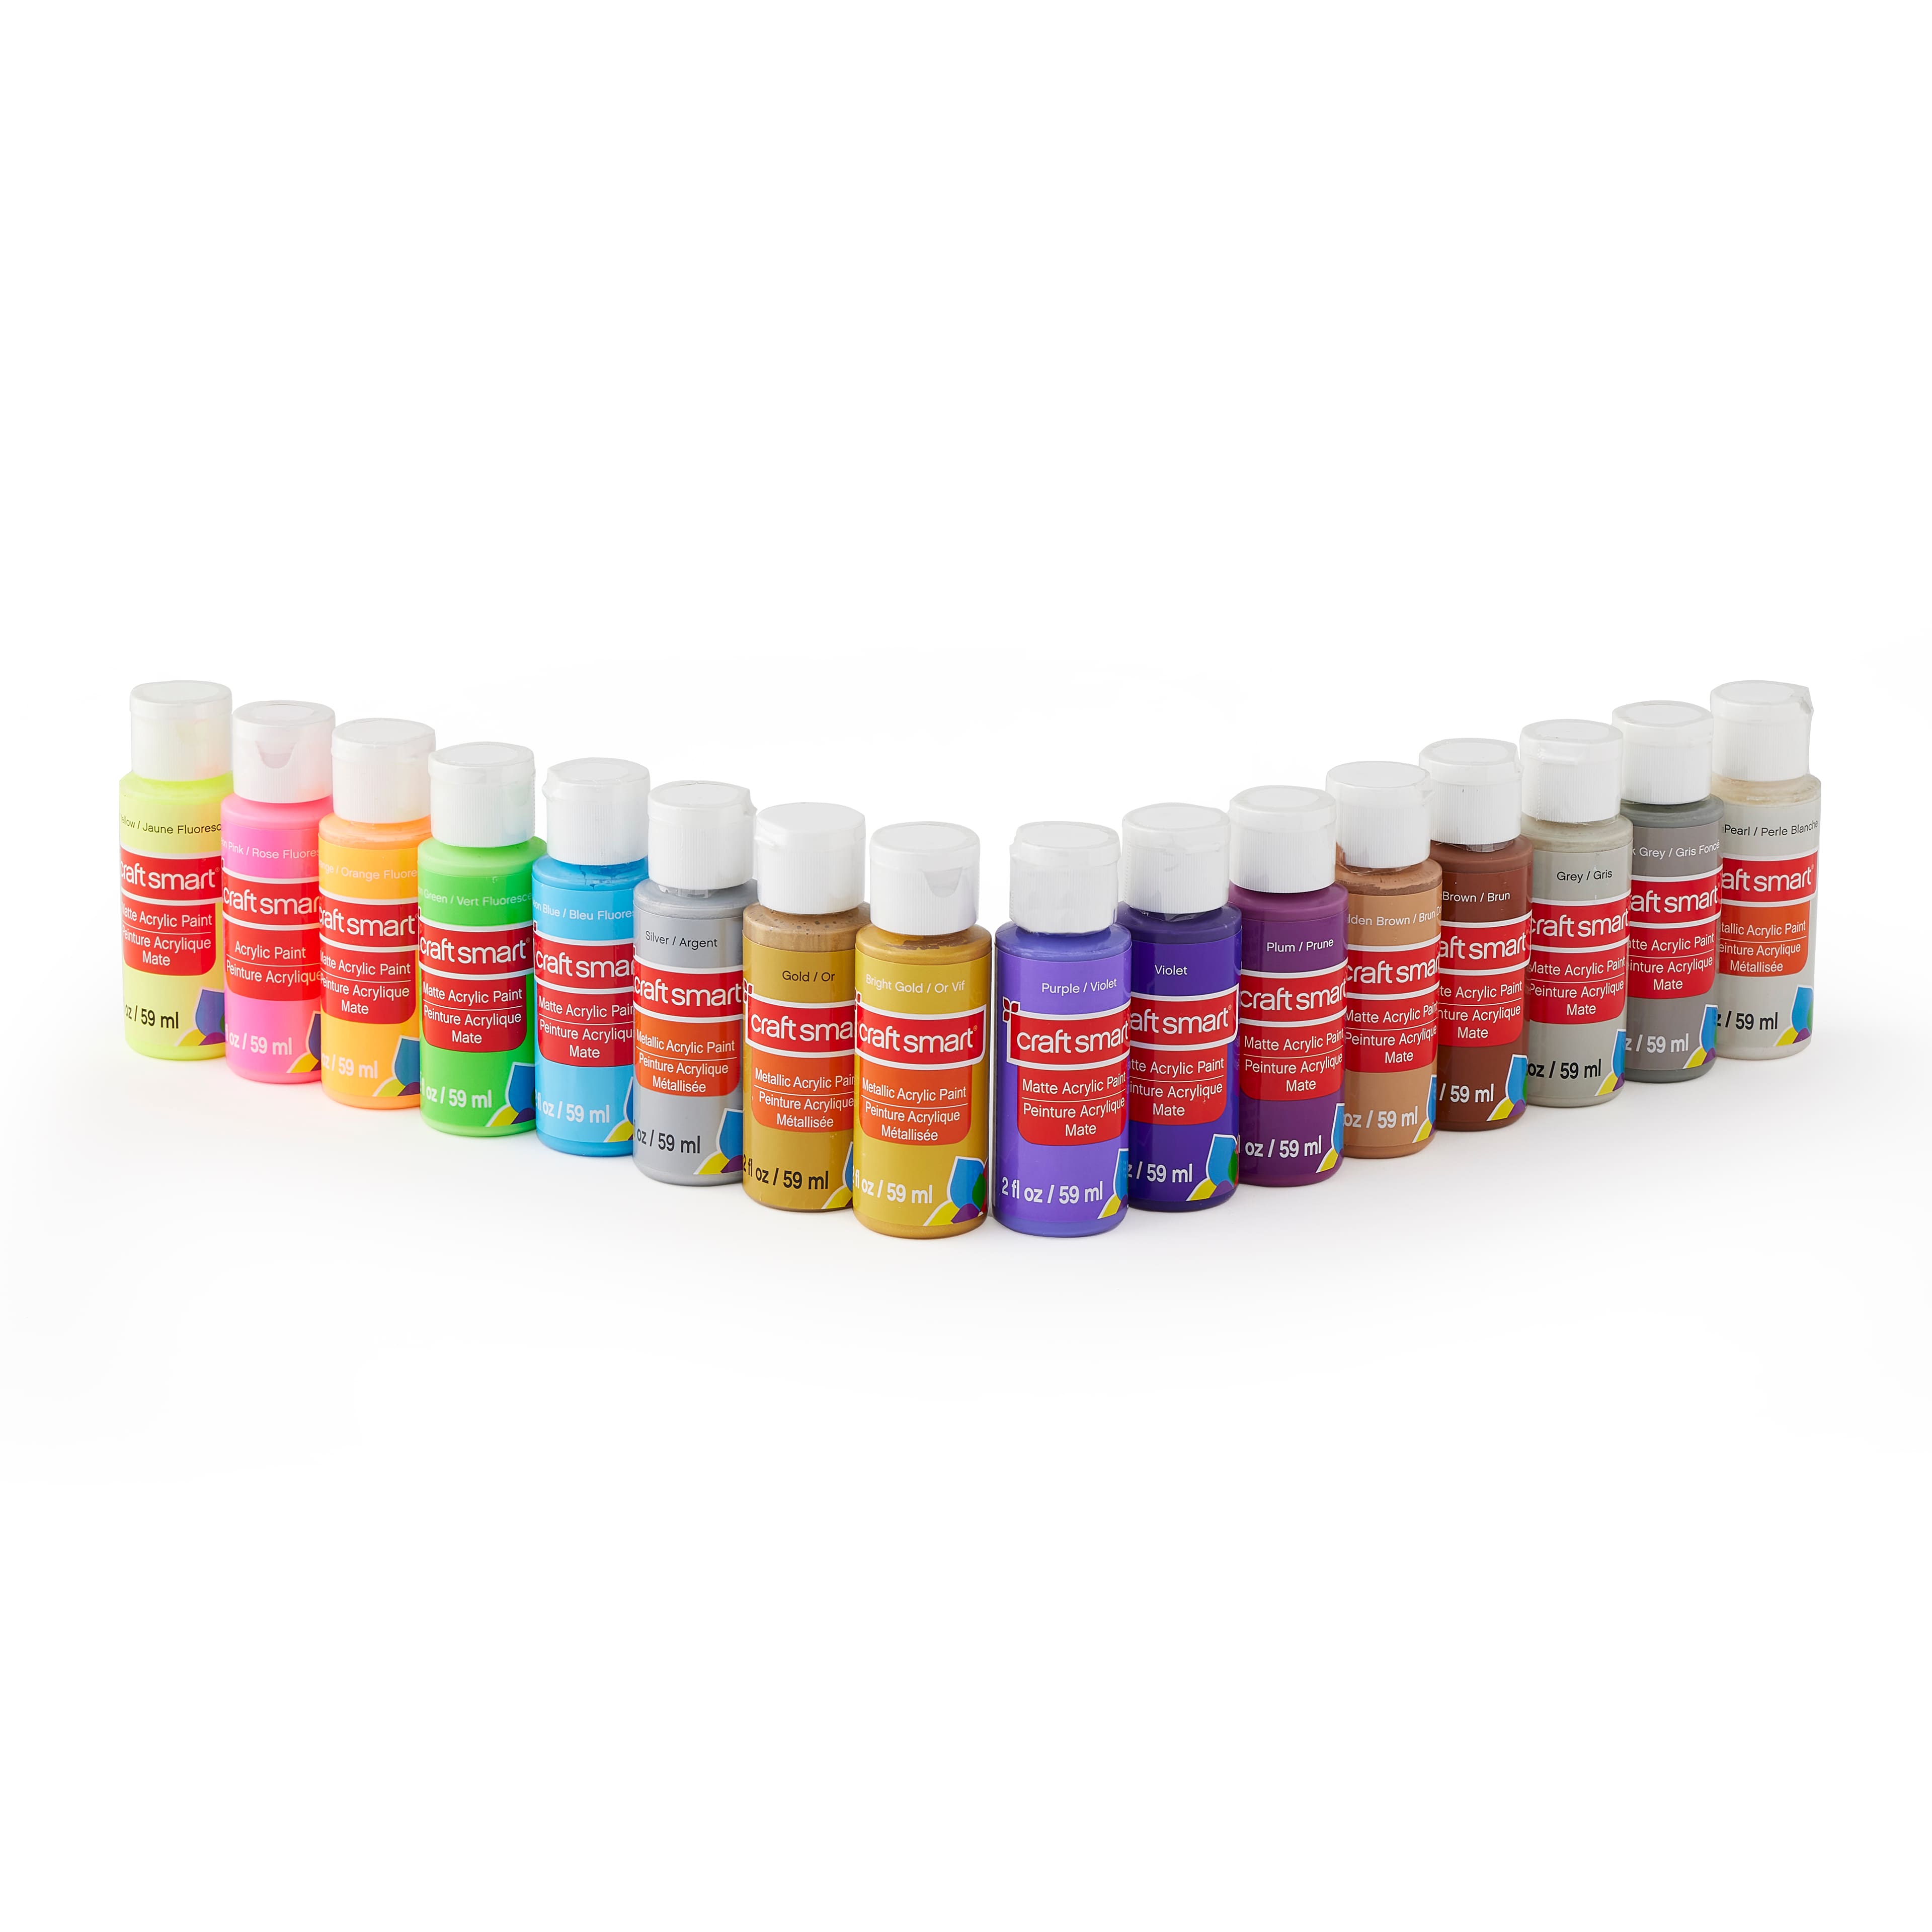 Craft Smart michaels bulk 12 packs: 16 ct. (192 total) matte acrylic paint  value pack by craft smart